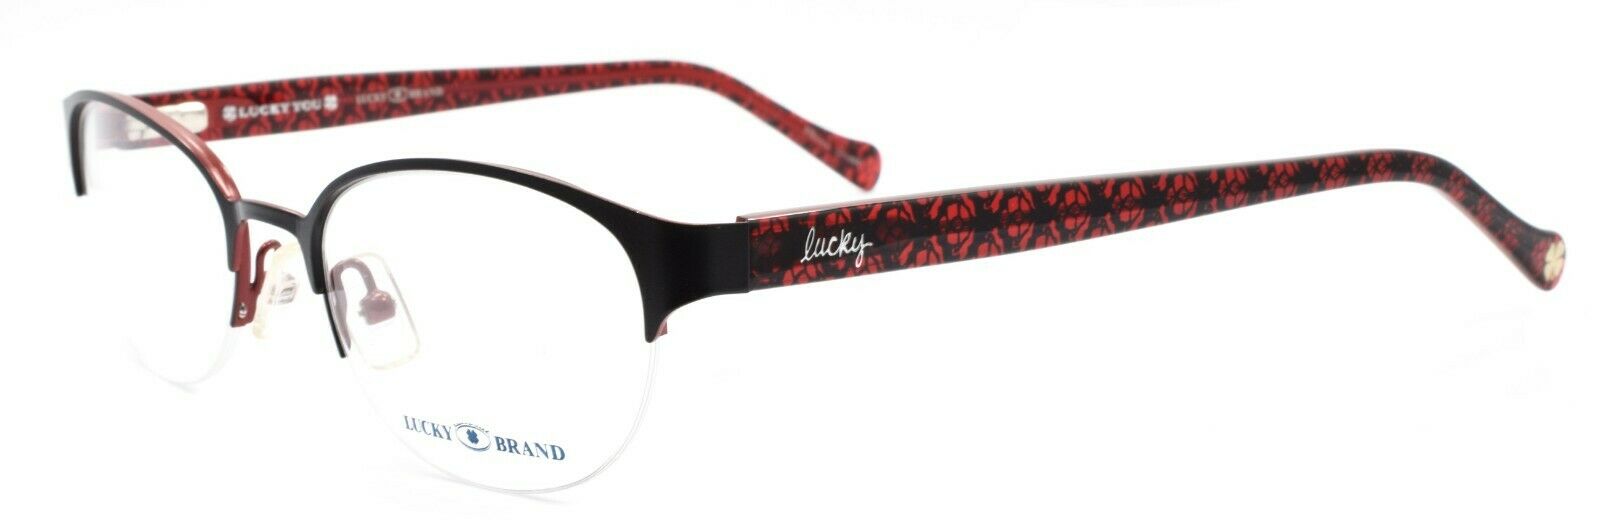 1-LUCKY BRAND Coastal Women's Eyeglasses Frames Half-rim 49-18-135 Black + CASE-751286249385-IKSpecs